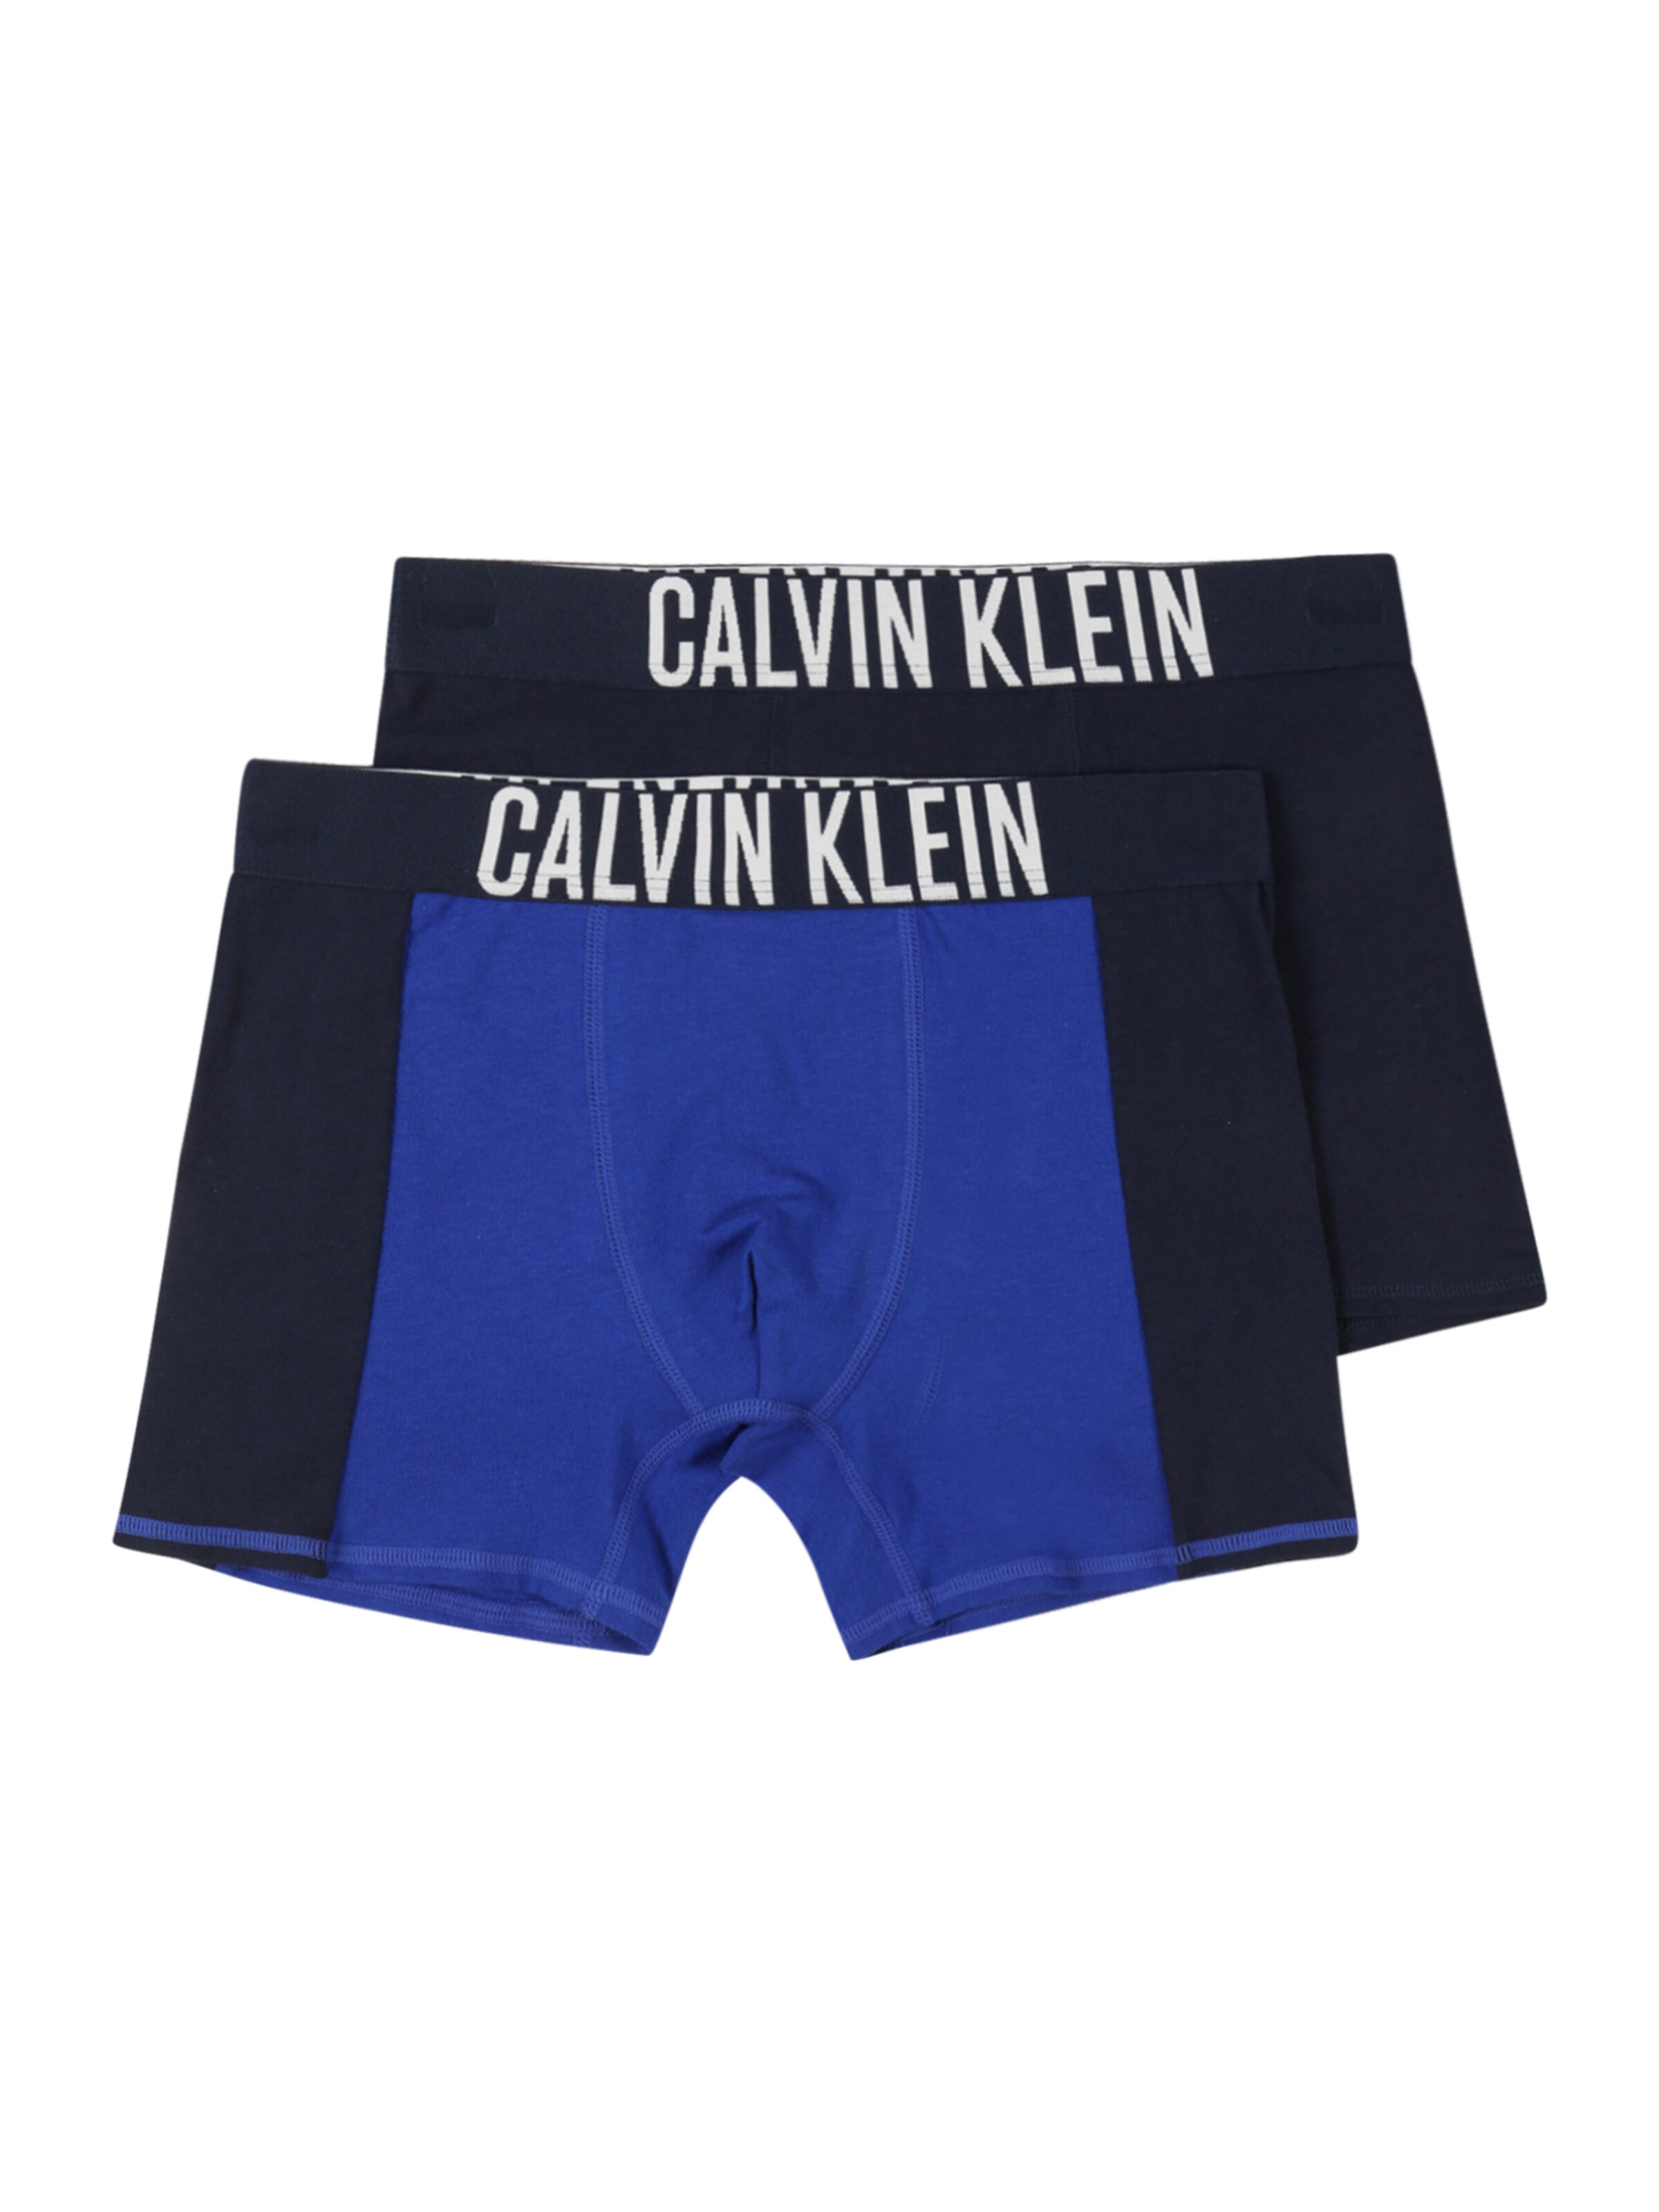 Enfants Sous-vêtements Intense Power Calvin Klein Underwear en Bleu Nuit, Bleu 